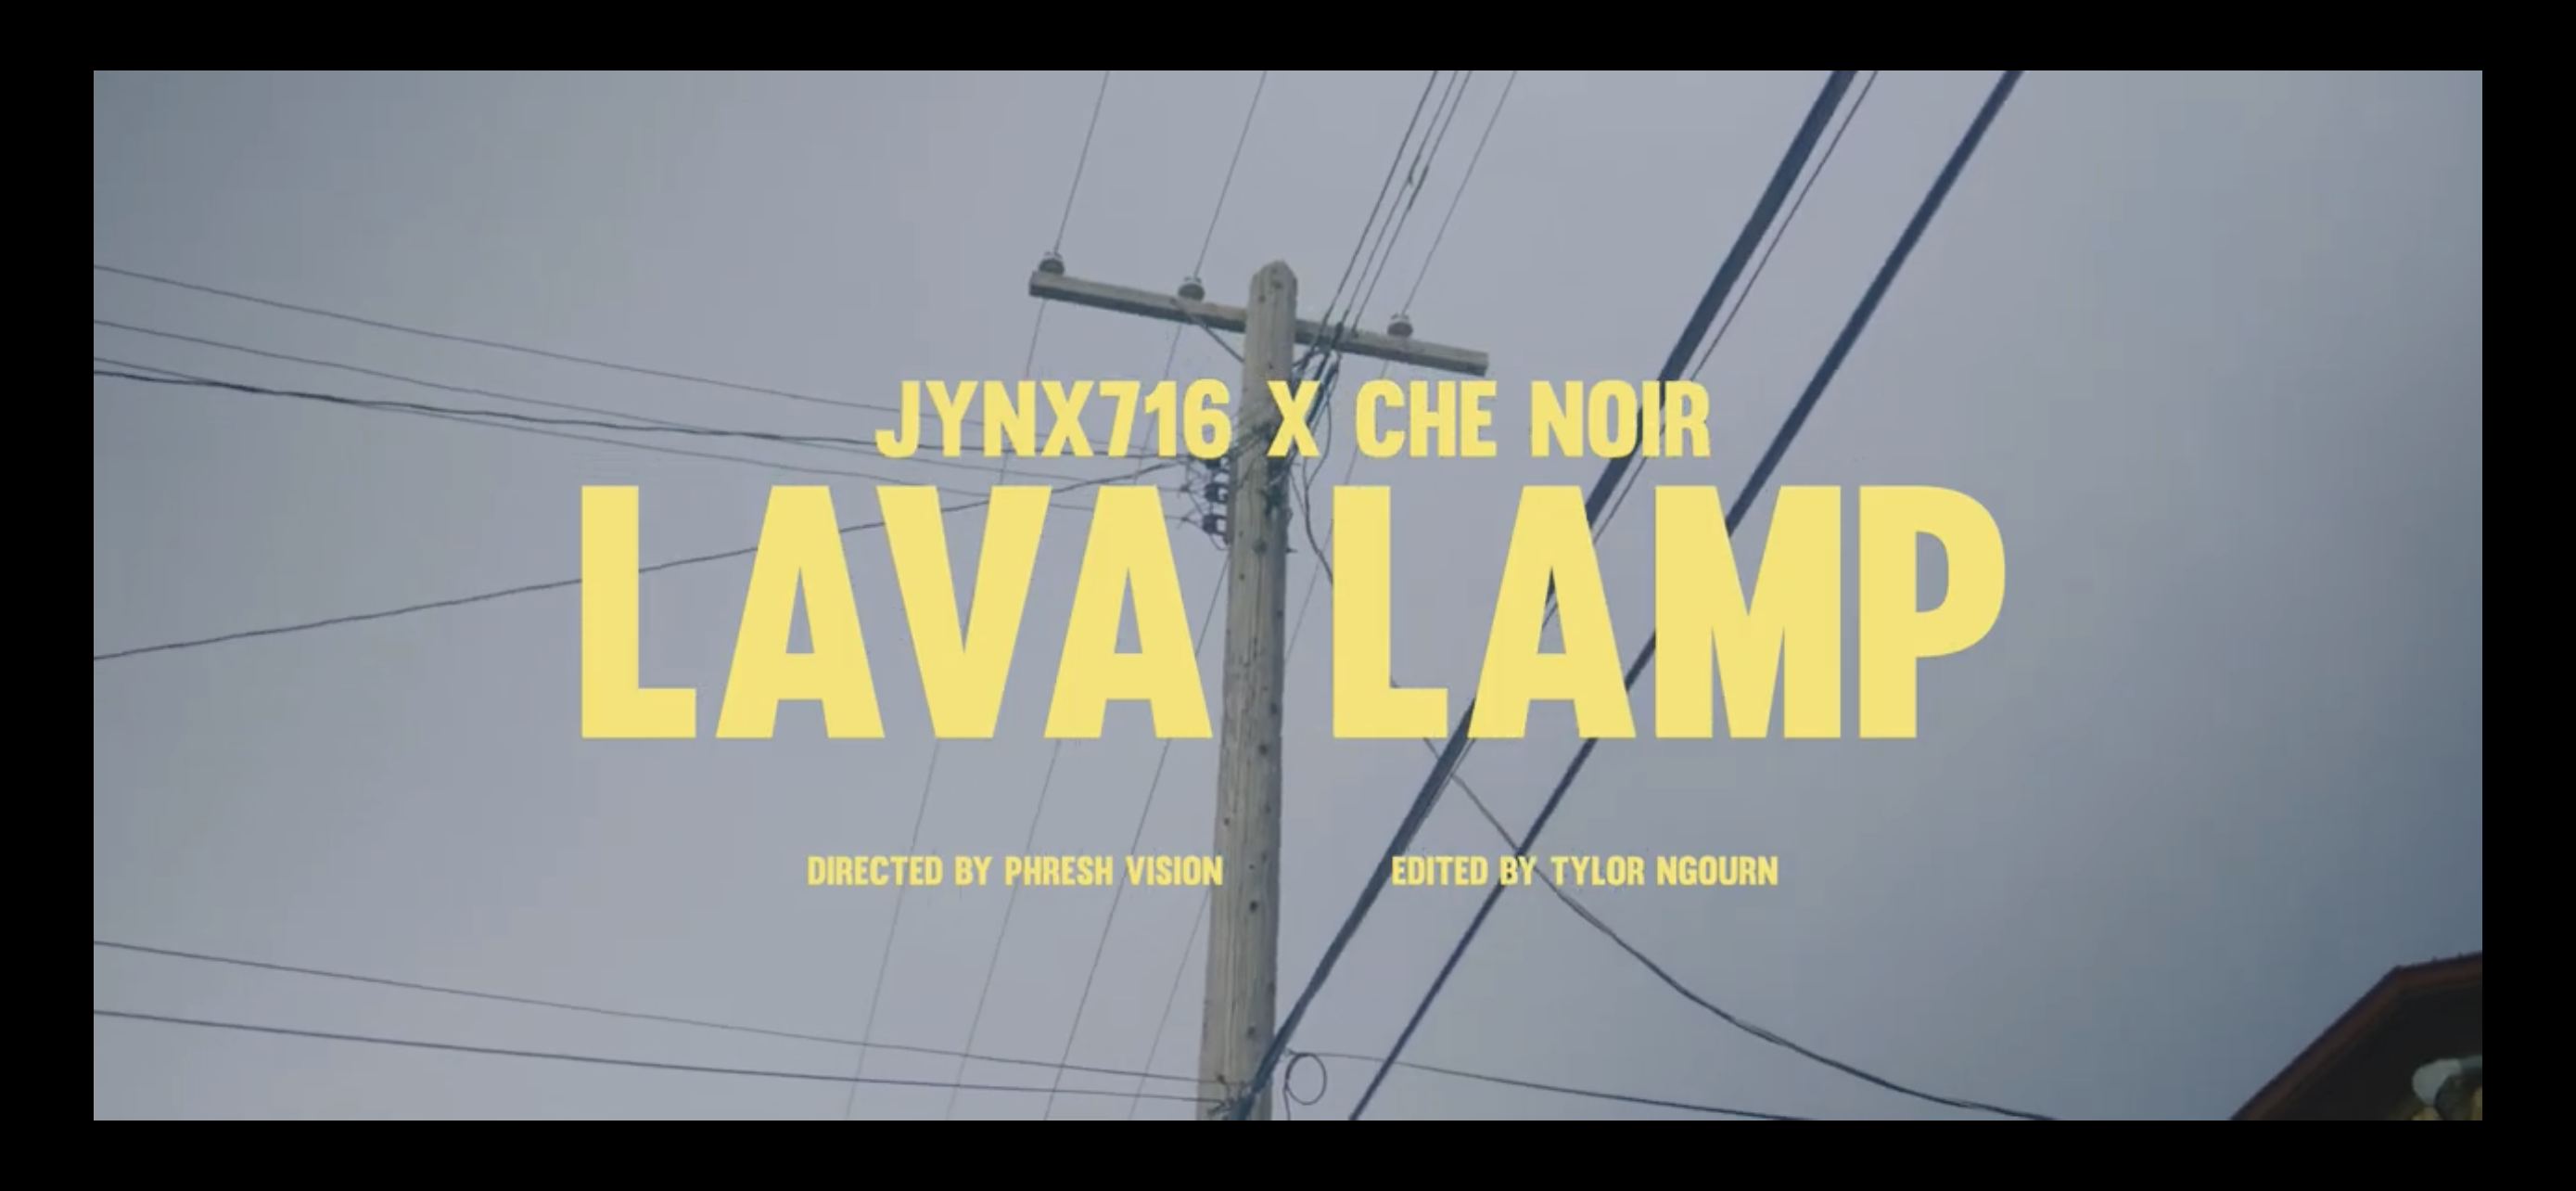 Che`Noir & Jynx716 - Lava Lamp (Produced by Che`Noir) Official Music Video